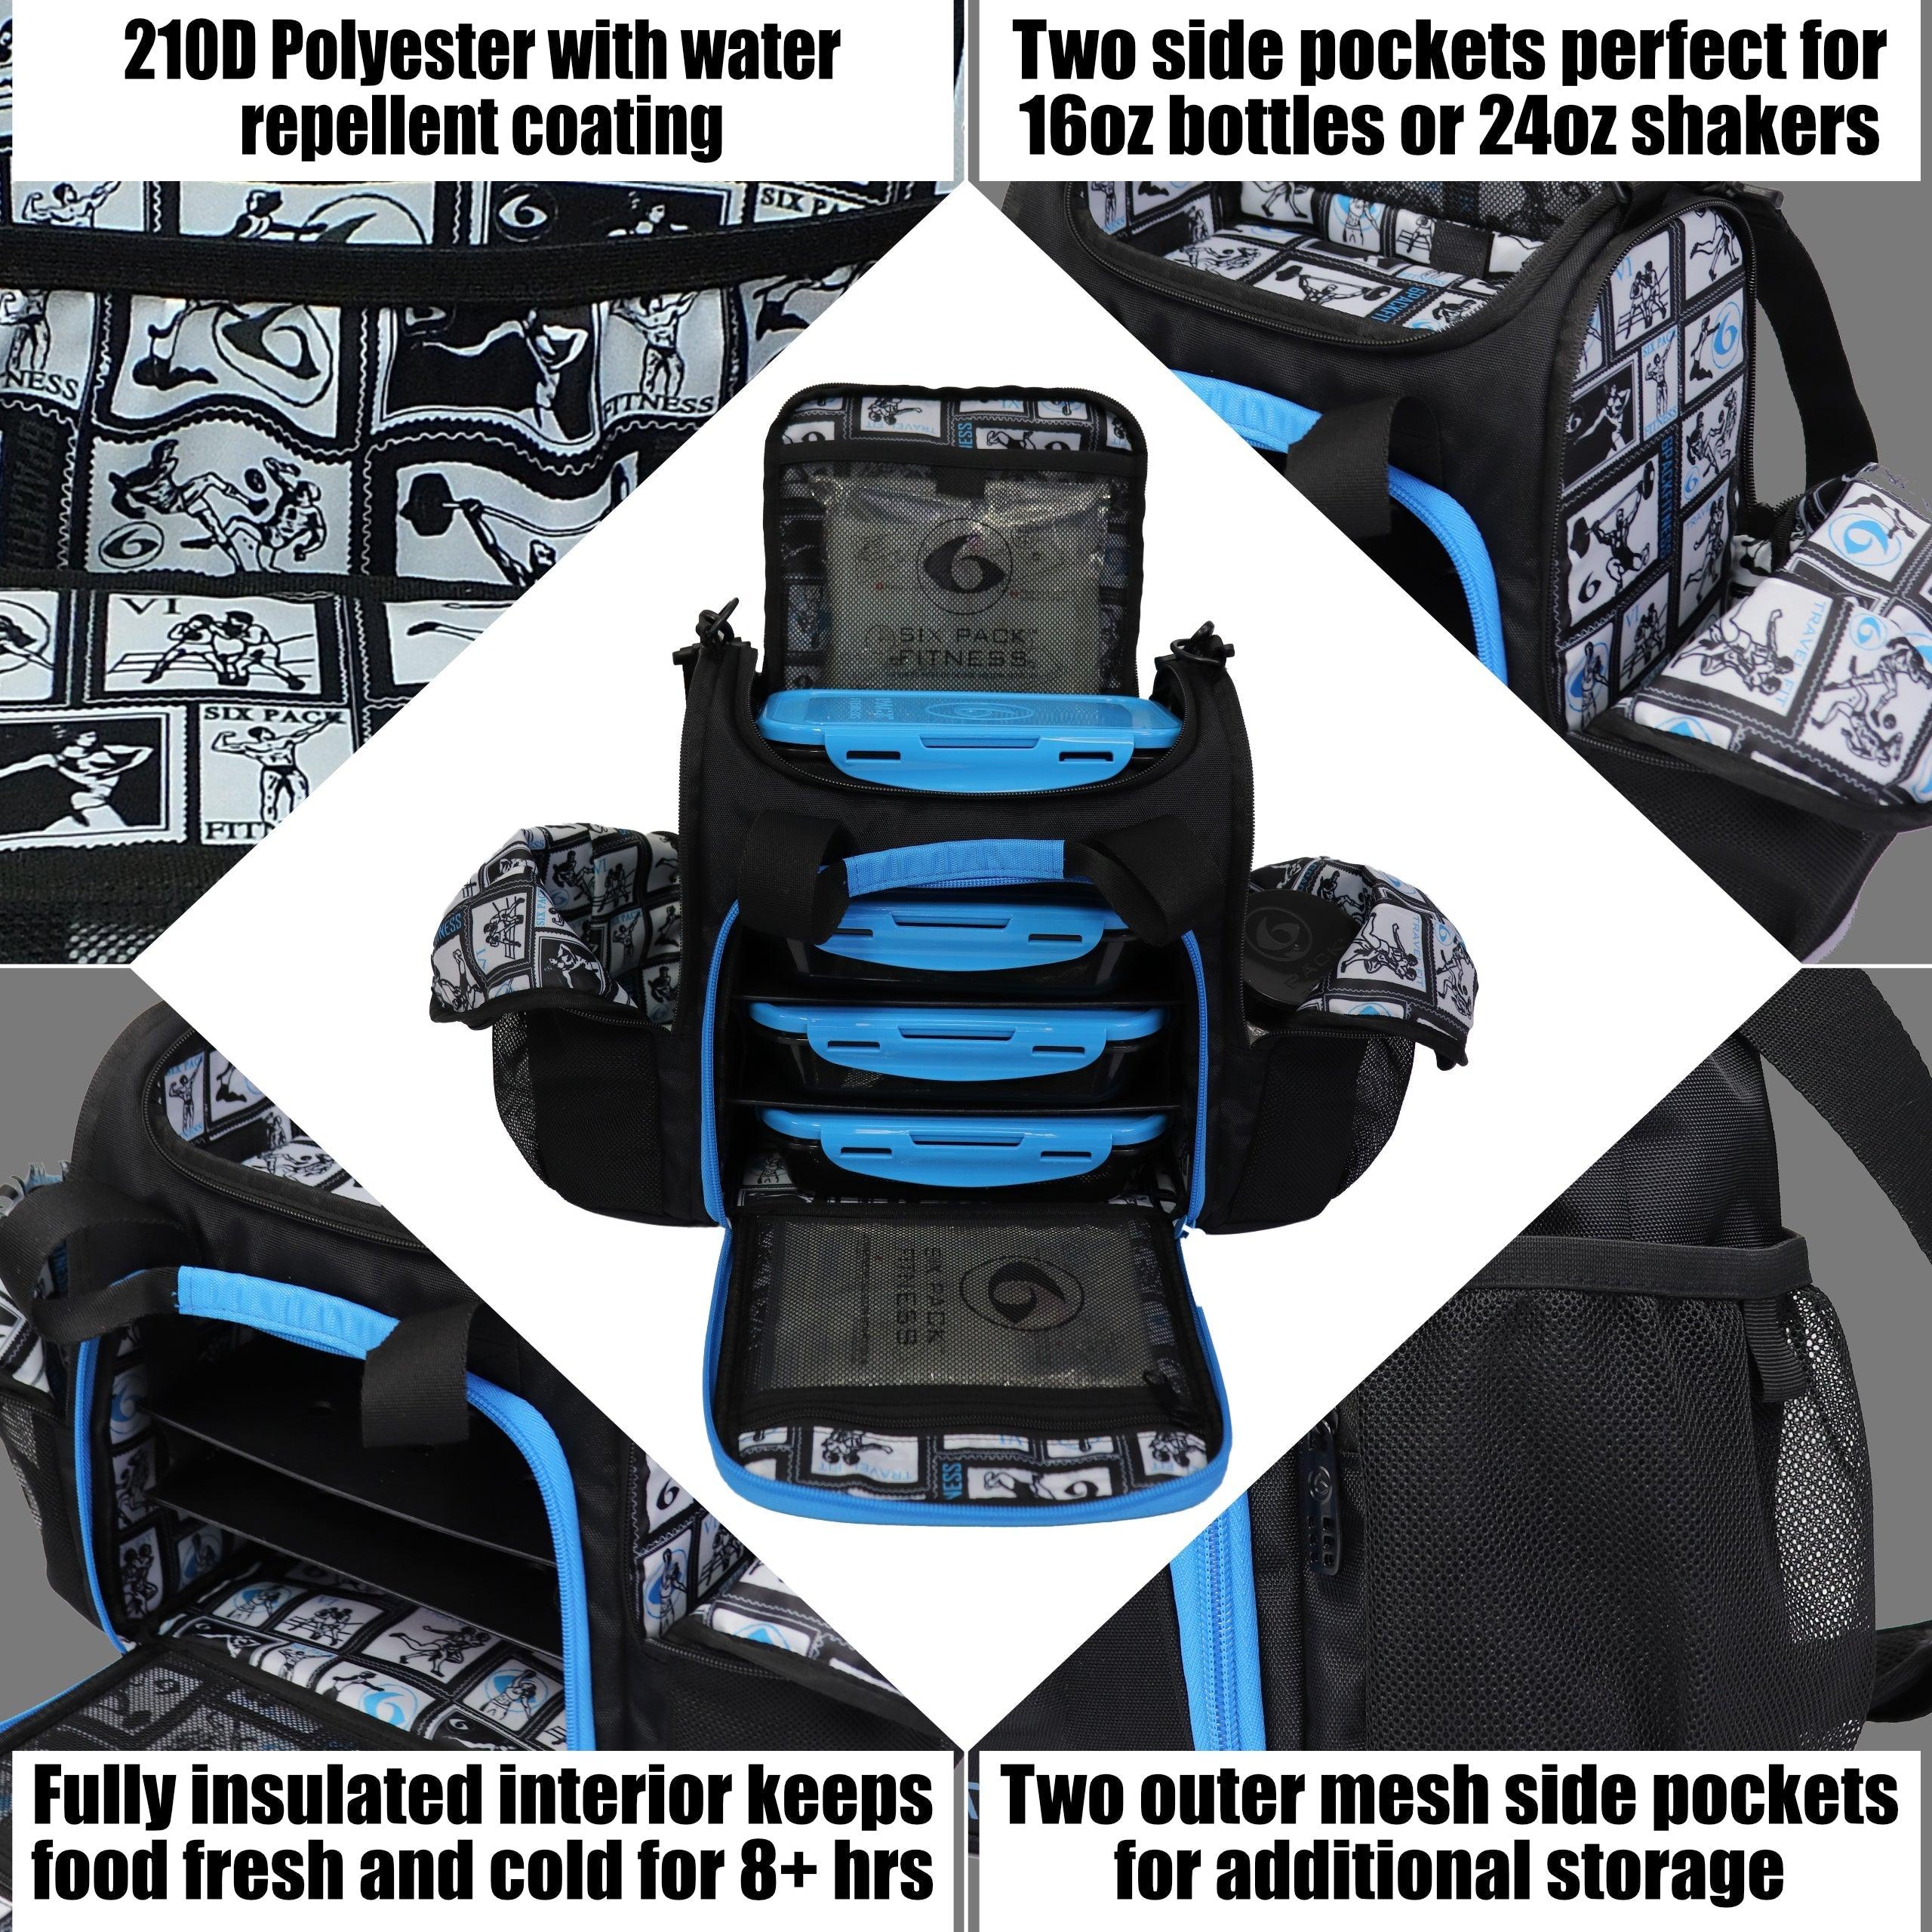 Innovator Mini Meal Prep Management Tote | Black/Blue - sixpackbags